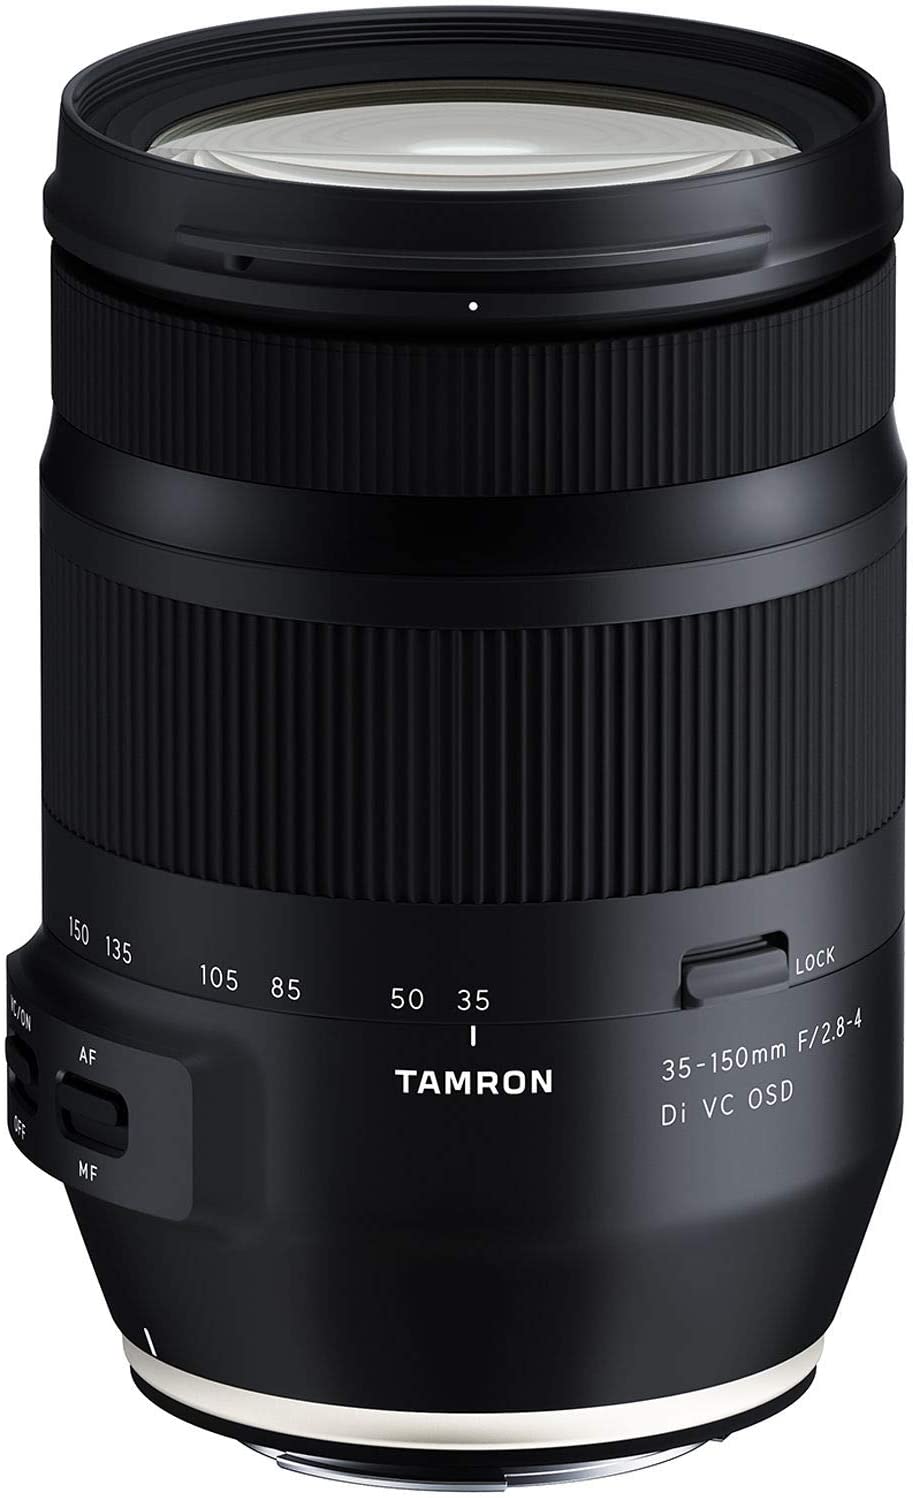 Tamron 35-150mm F/2.8-4 Di VC OSD For Canon EF